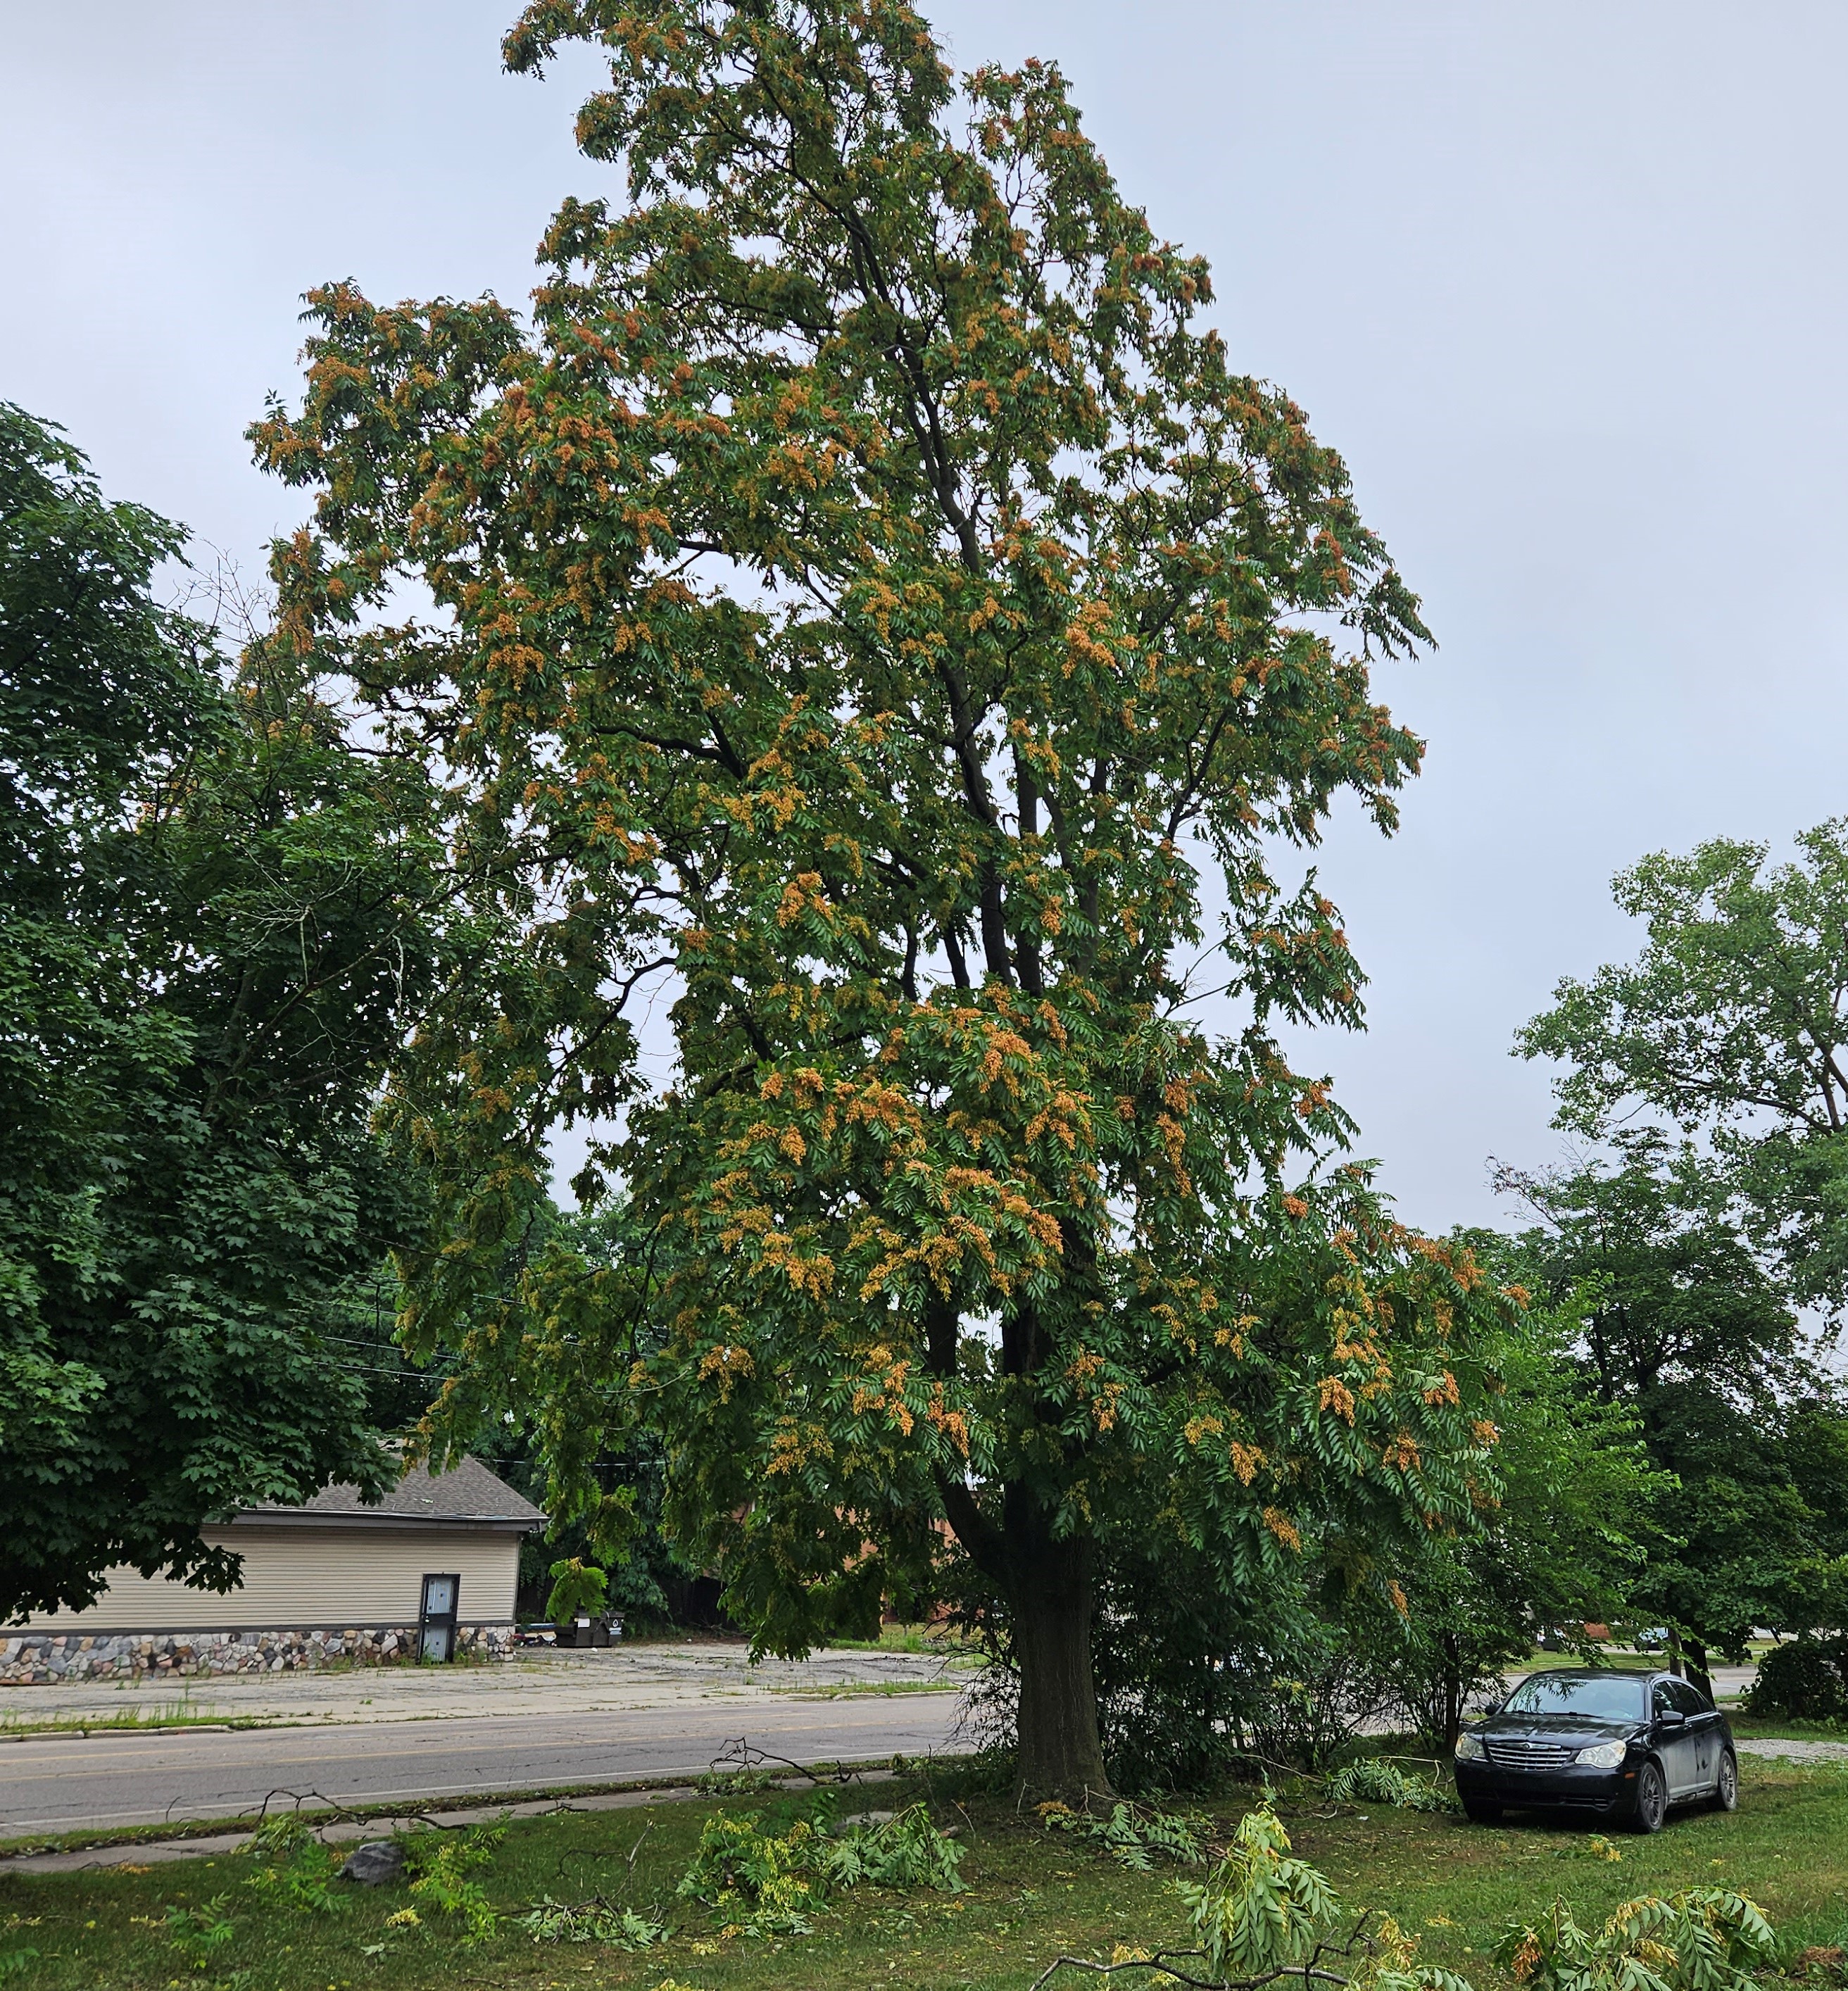 Large tree of heaven in a neighborhood.